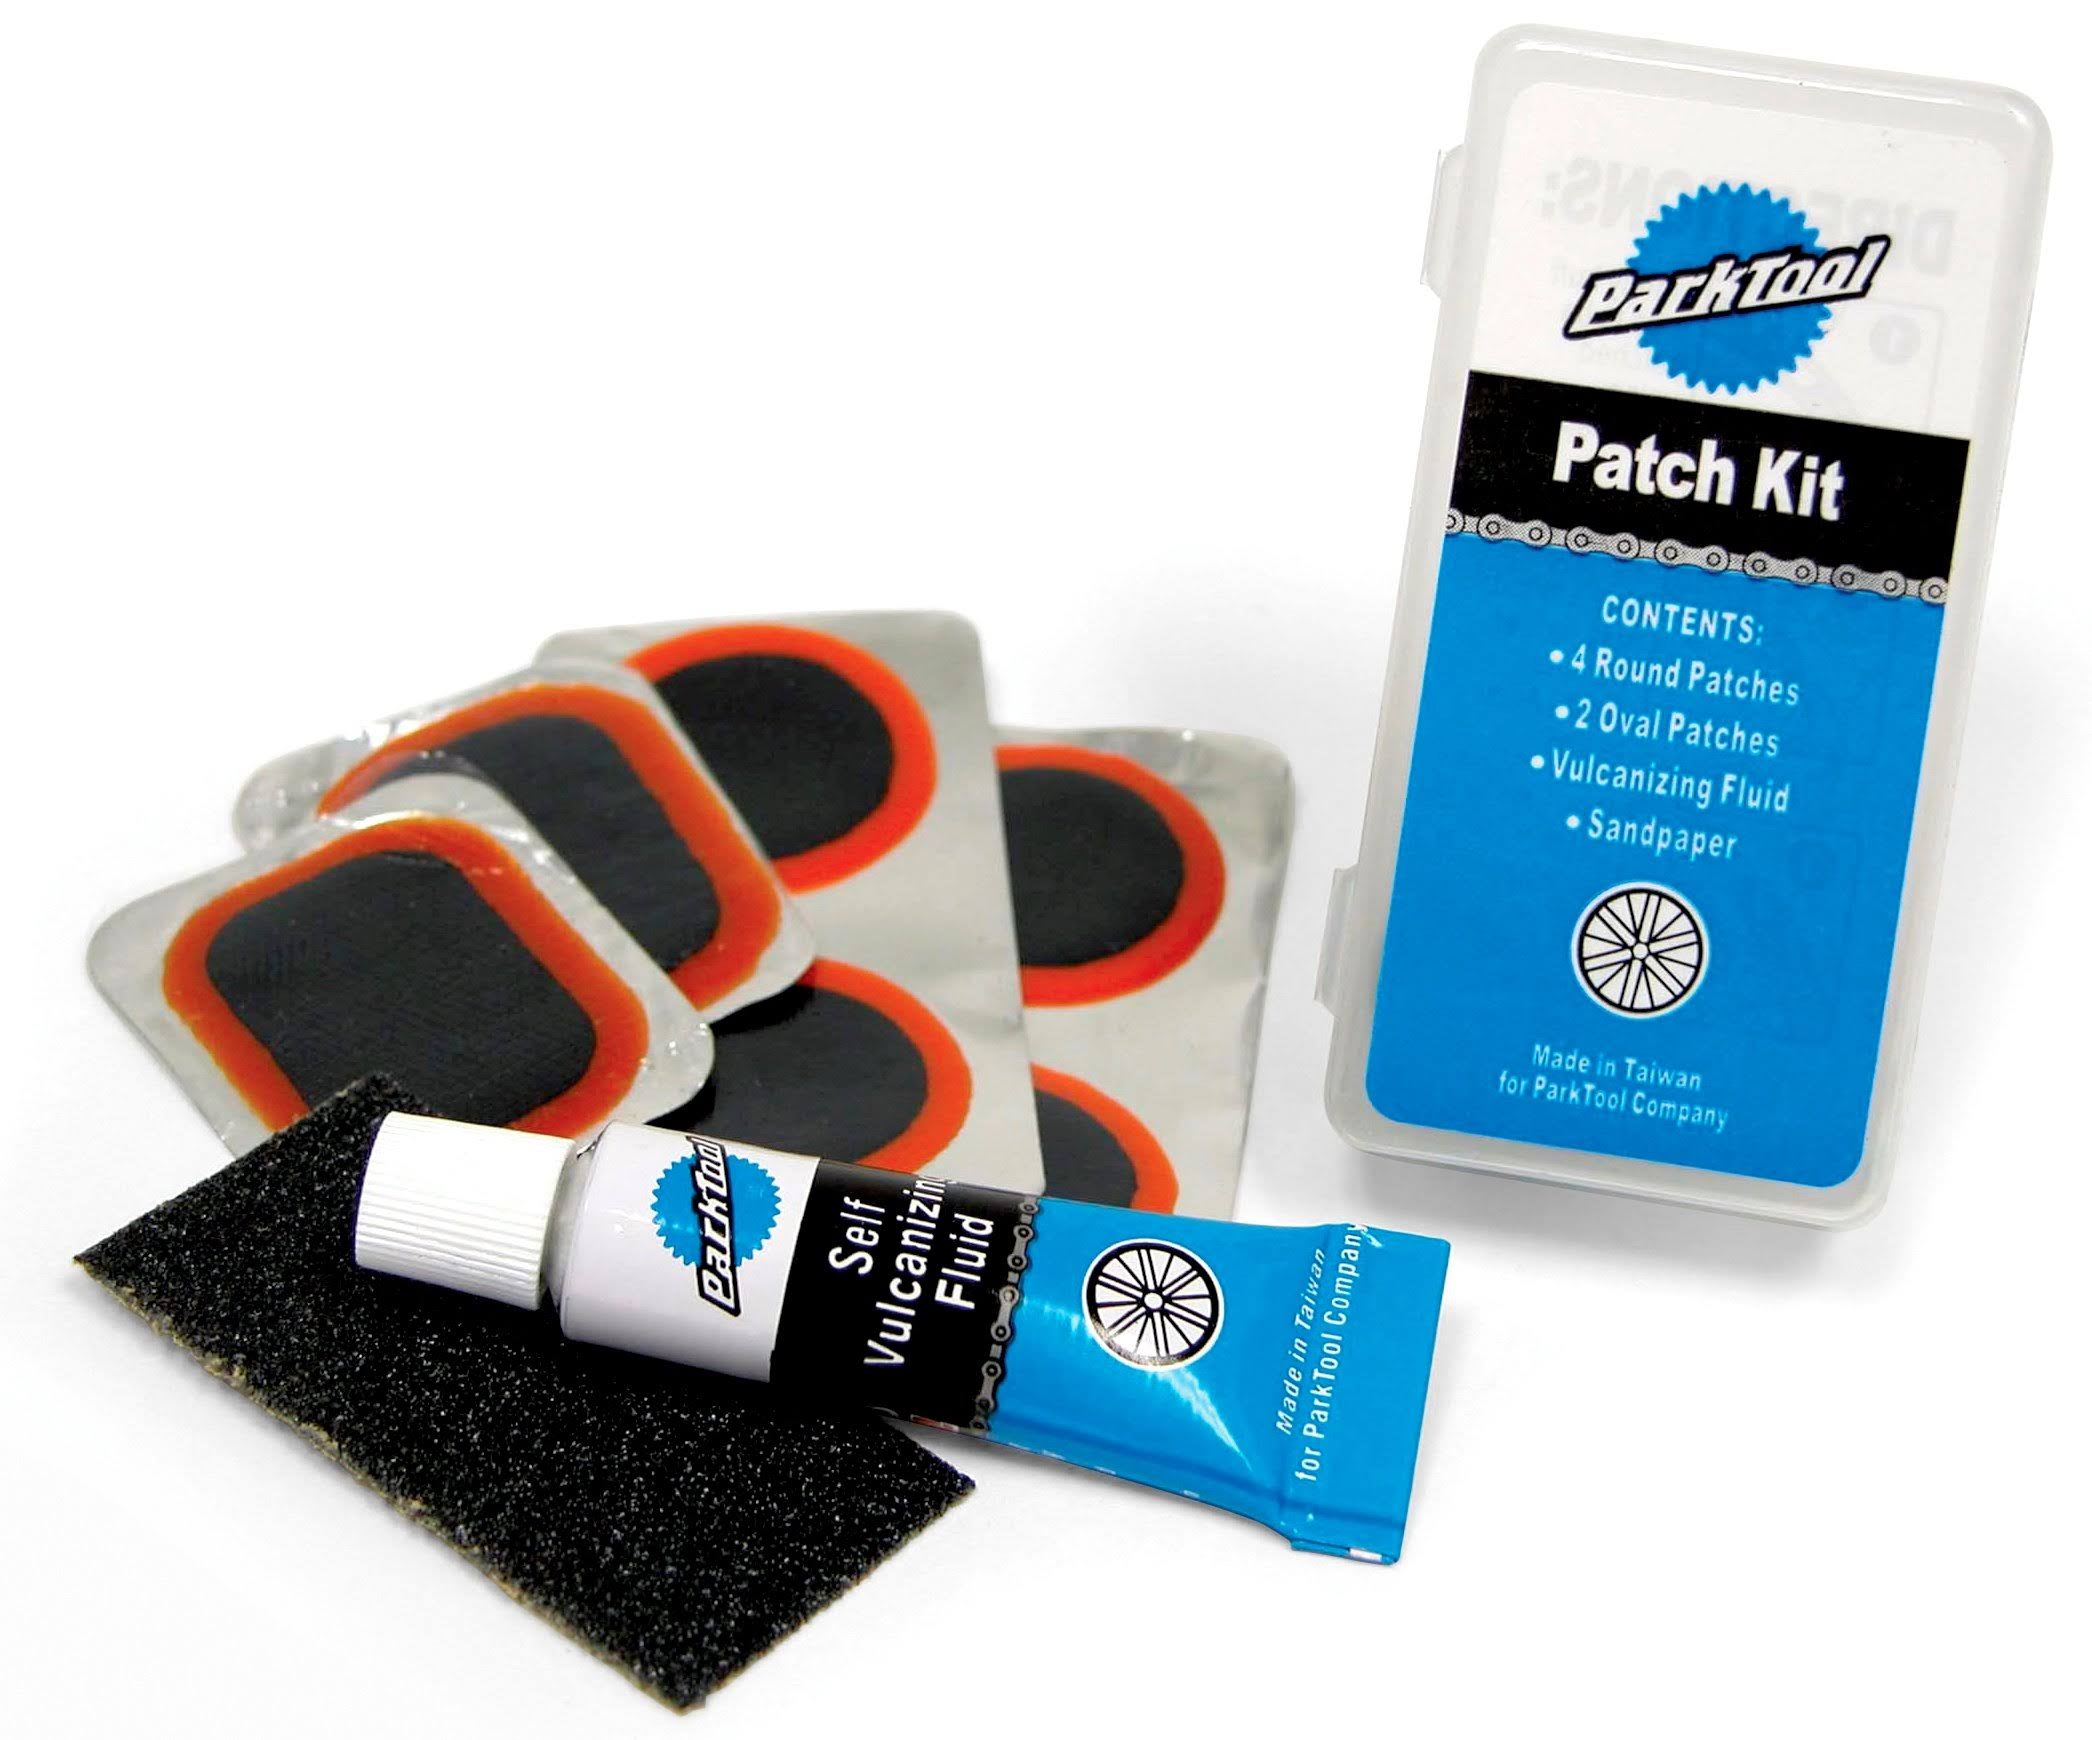 Park Tool Vulcanizing Patch Kit